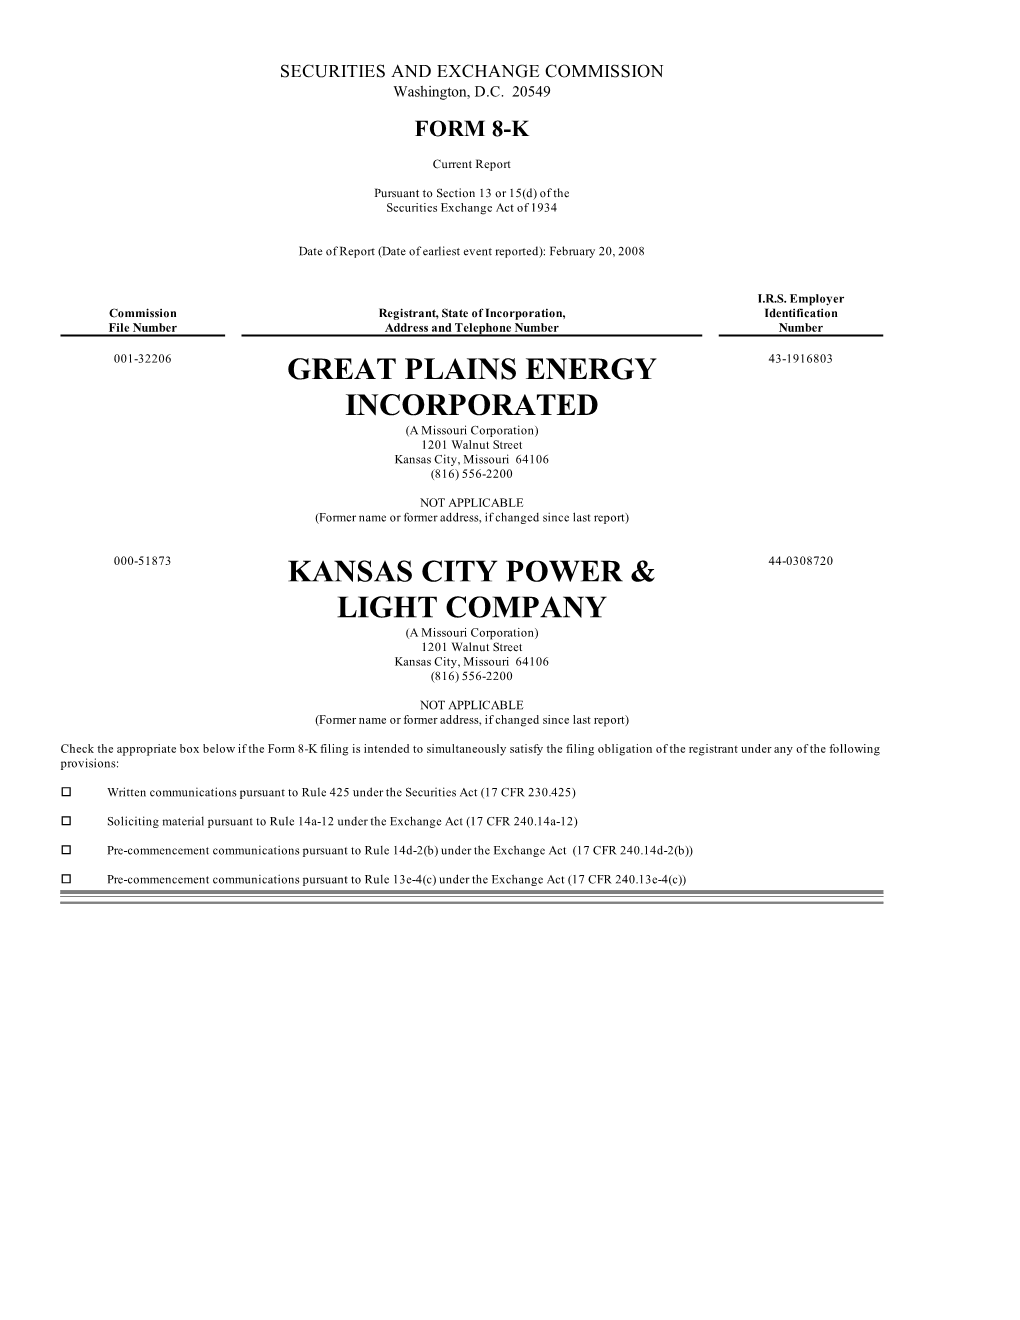 Great Plains Energy Incorporated Kansas City